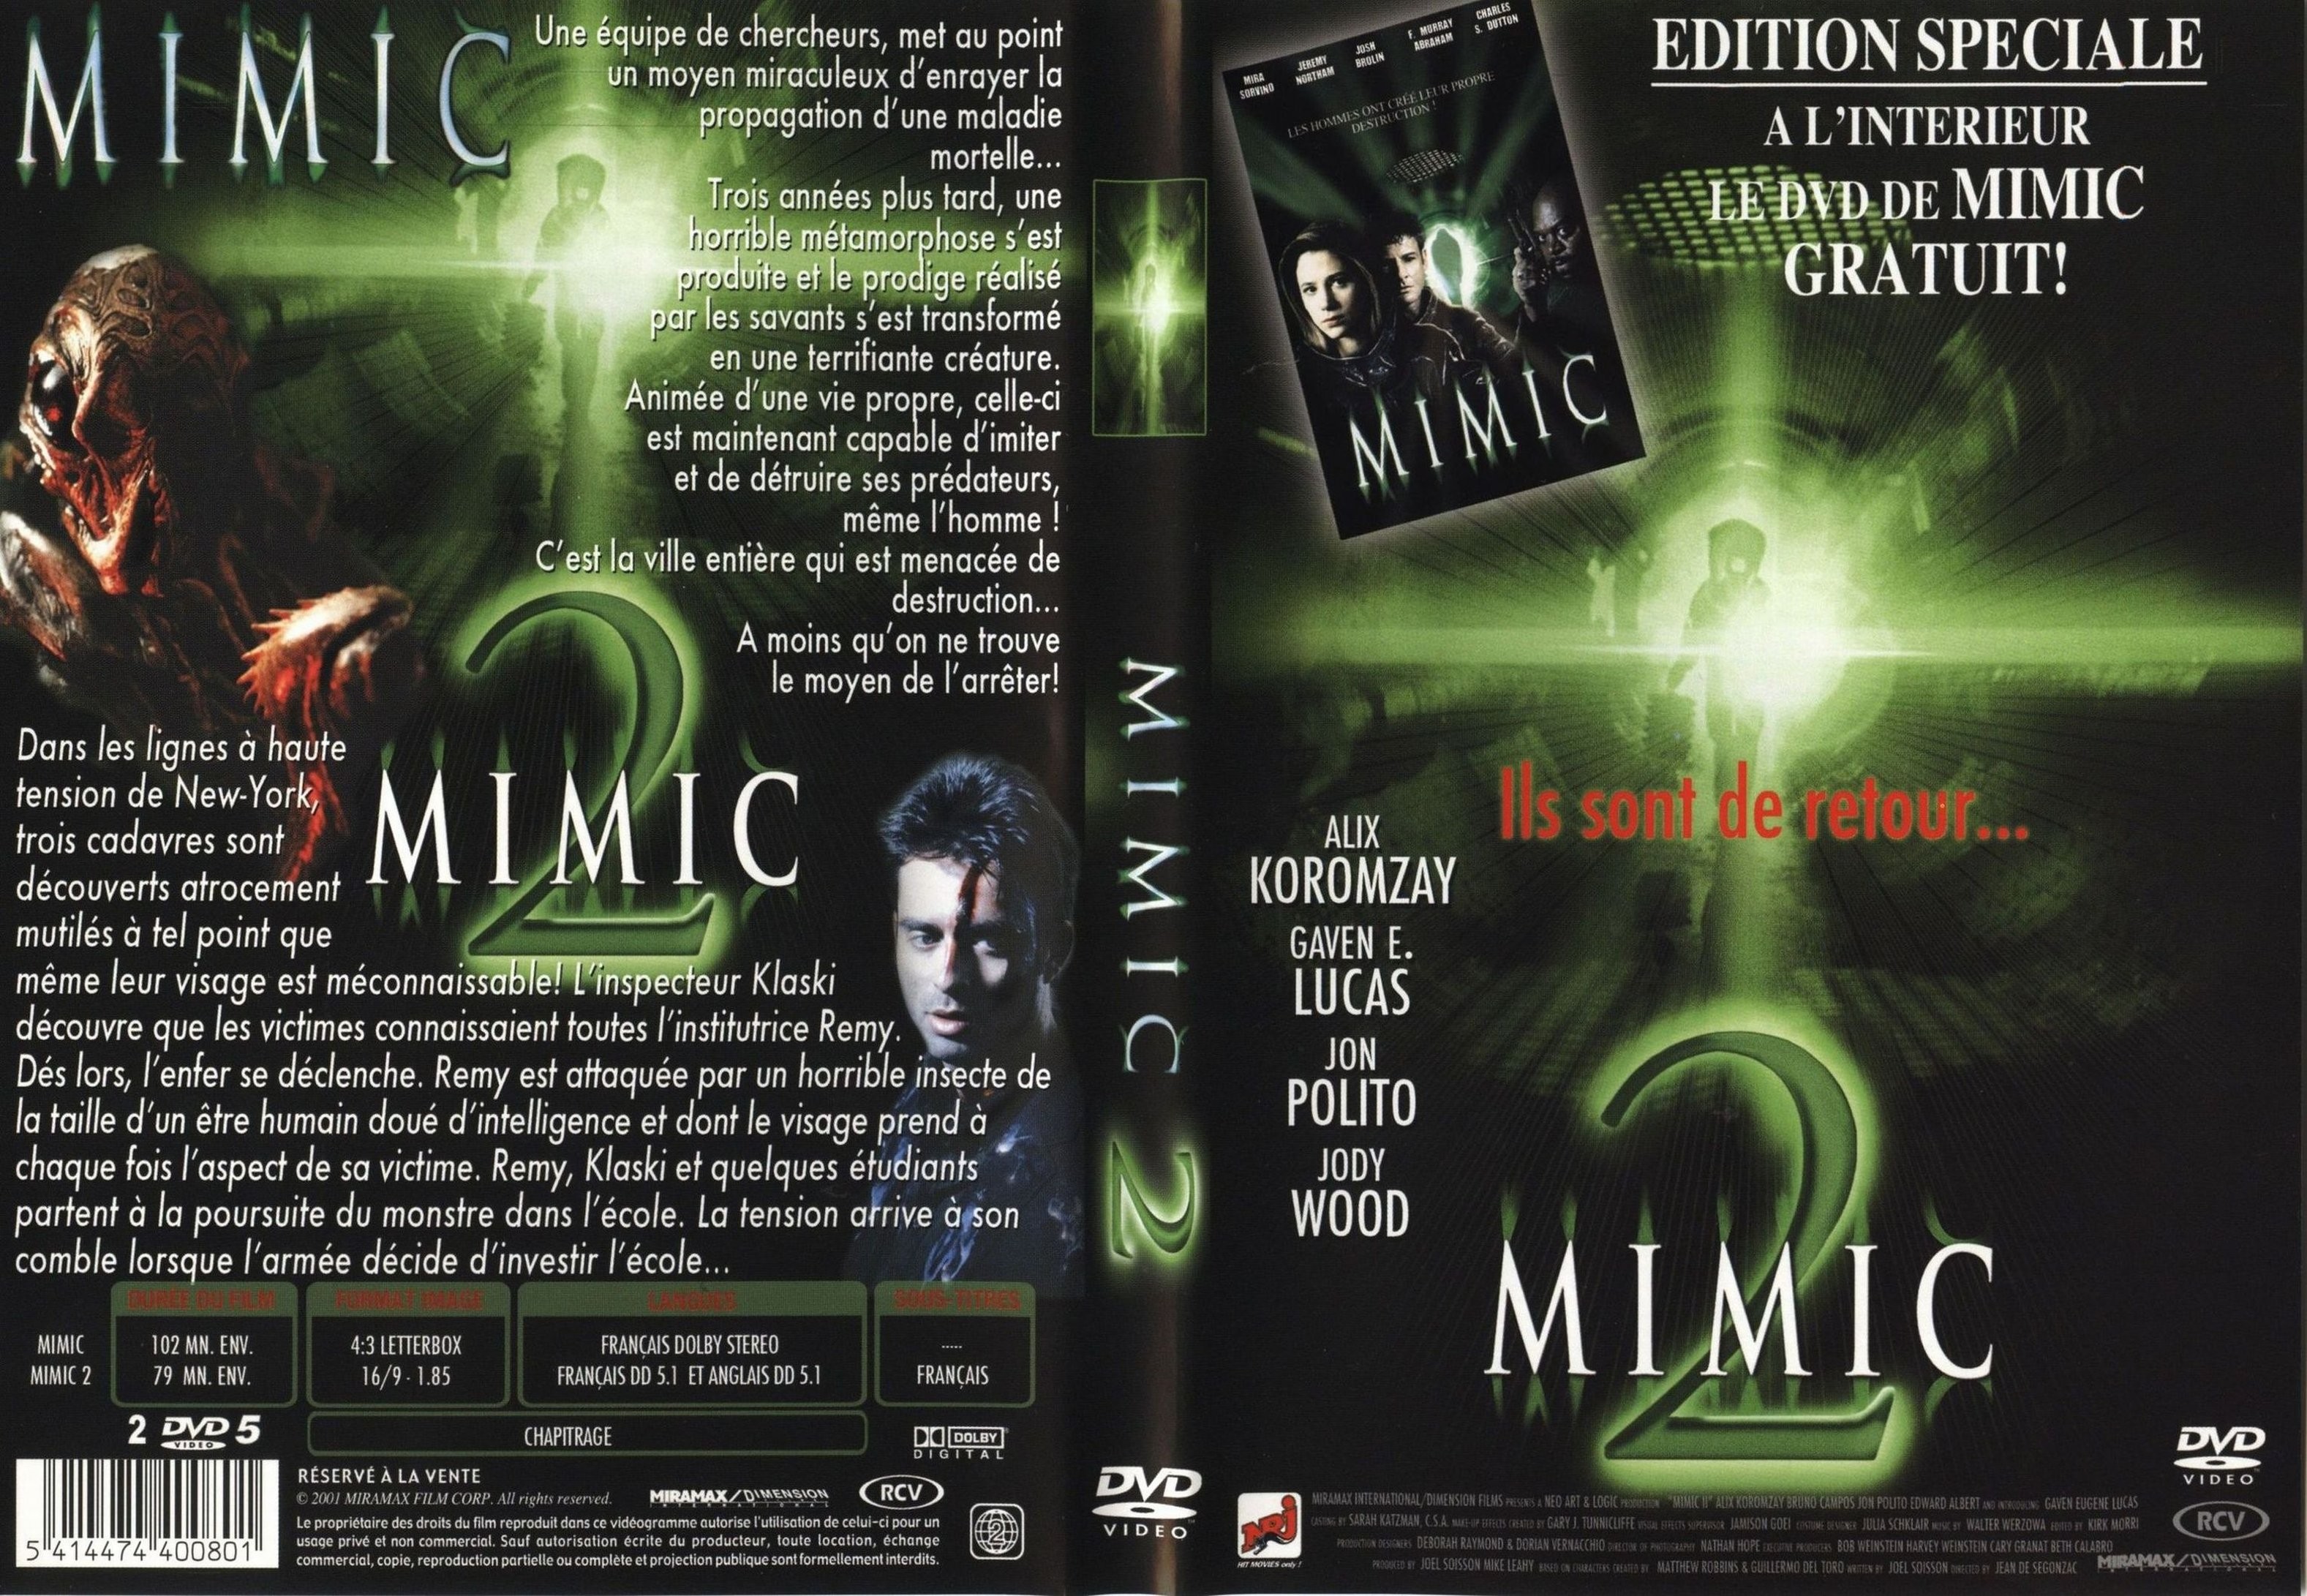 Jaquette DVD Mimic 2 v2